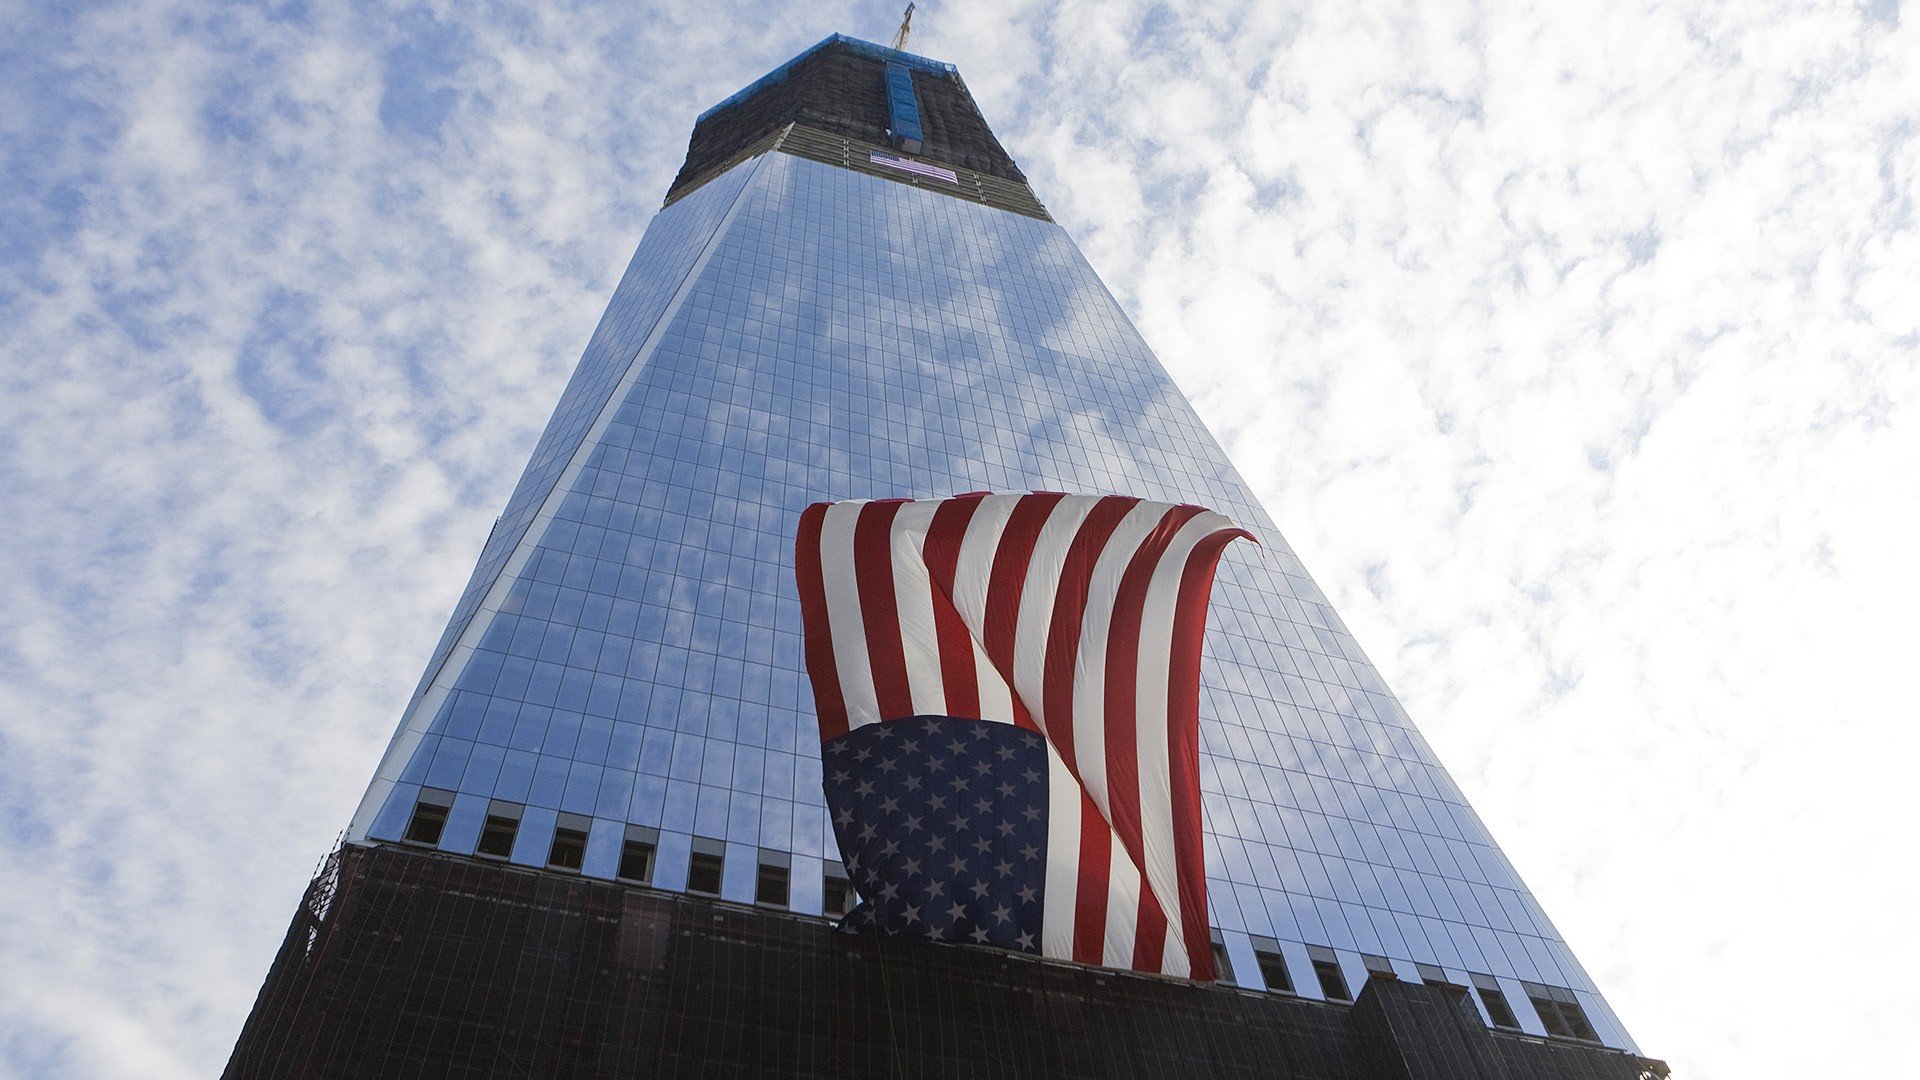 New York City Freedom Tower wallpaper 1920x1080 294443 1920x1080